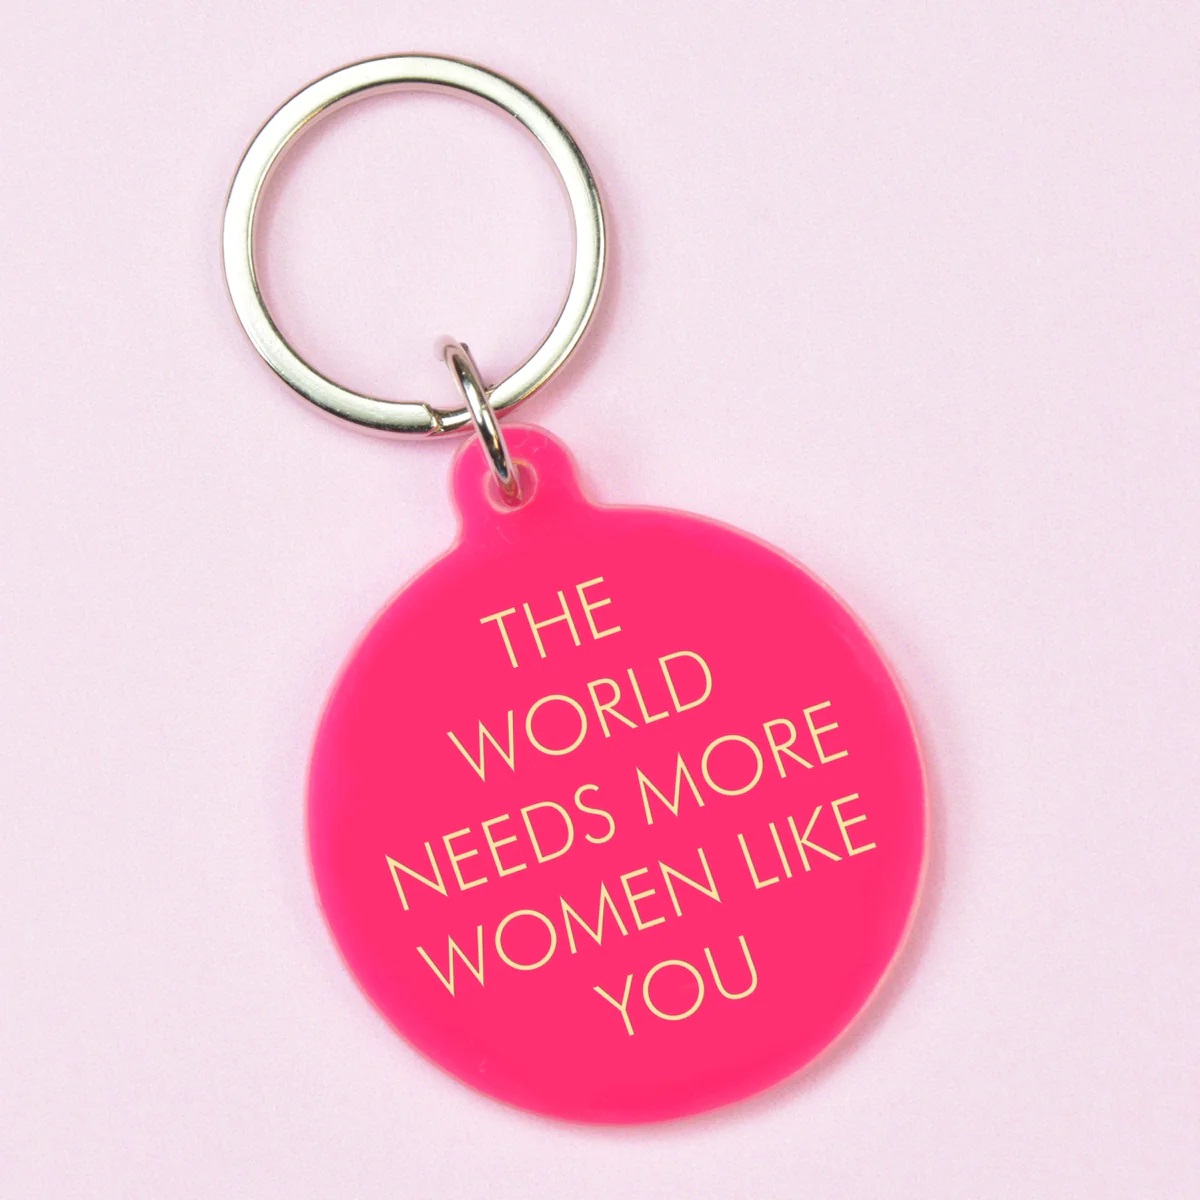 The World Needs More Women Like You Keychain